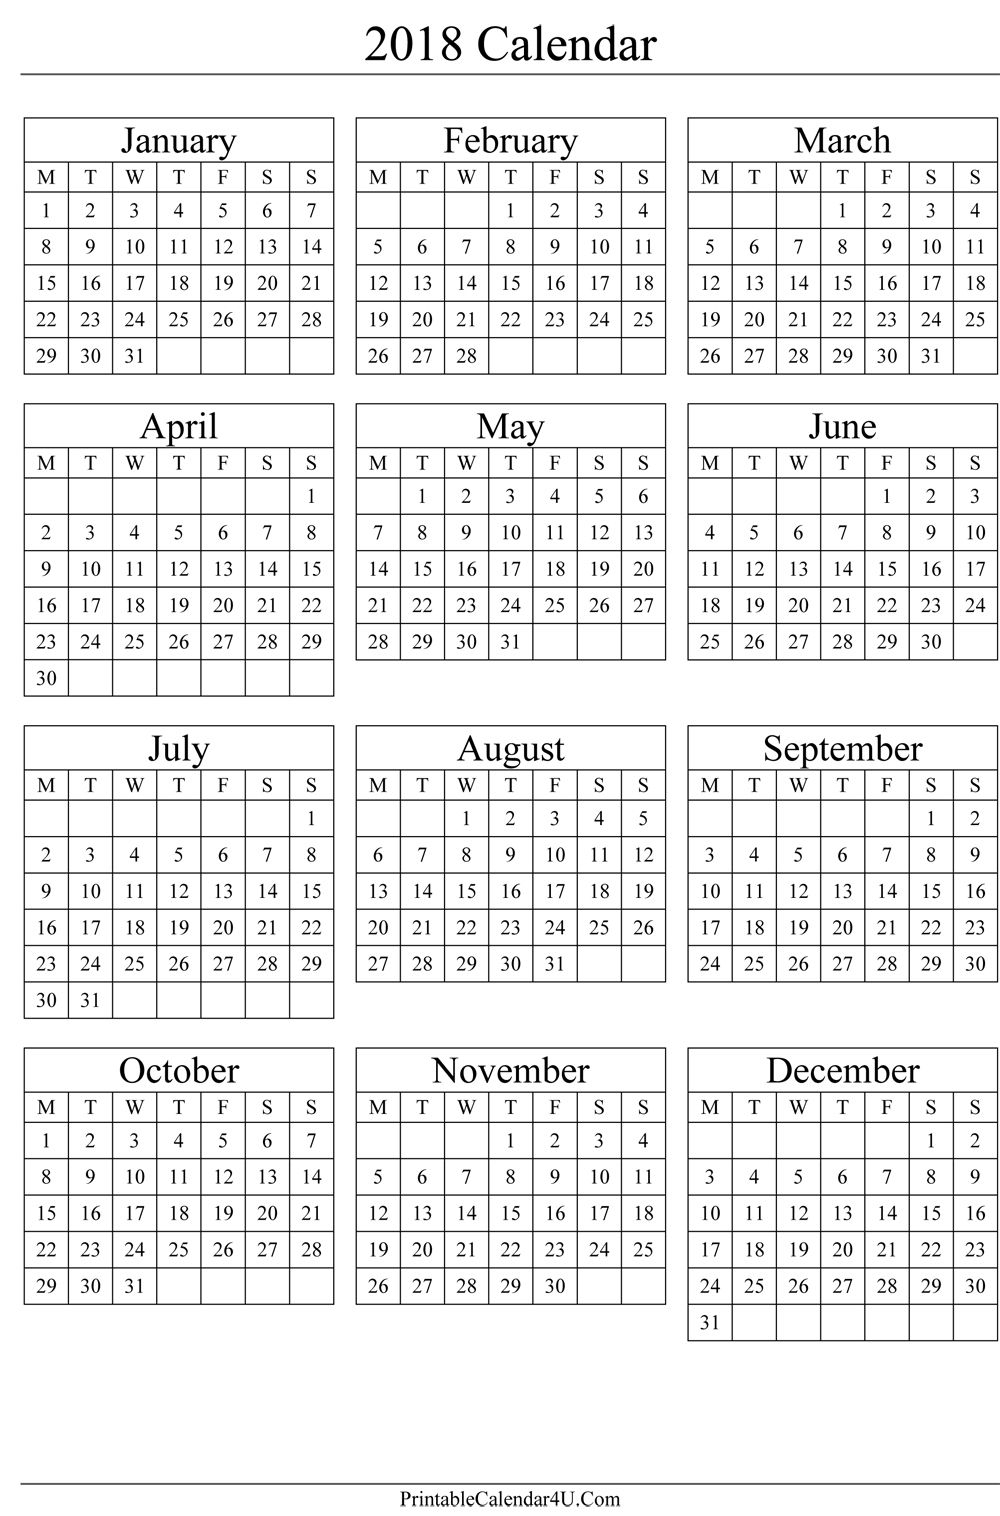 Pincalendar Printable On 2018 Calendar | Calendar 2019